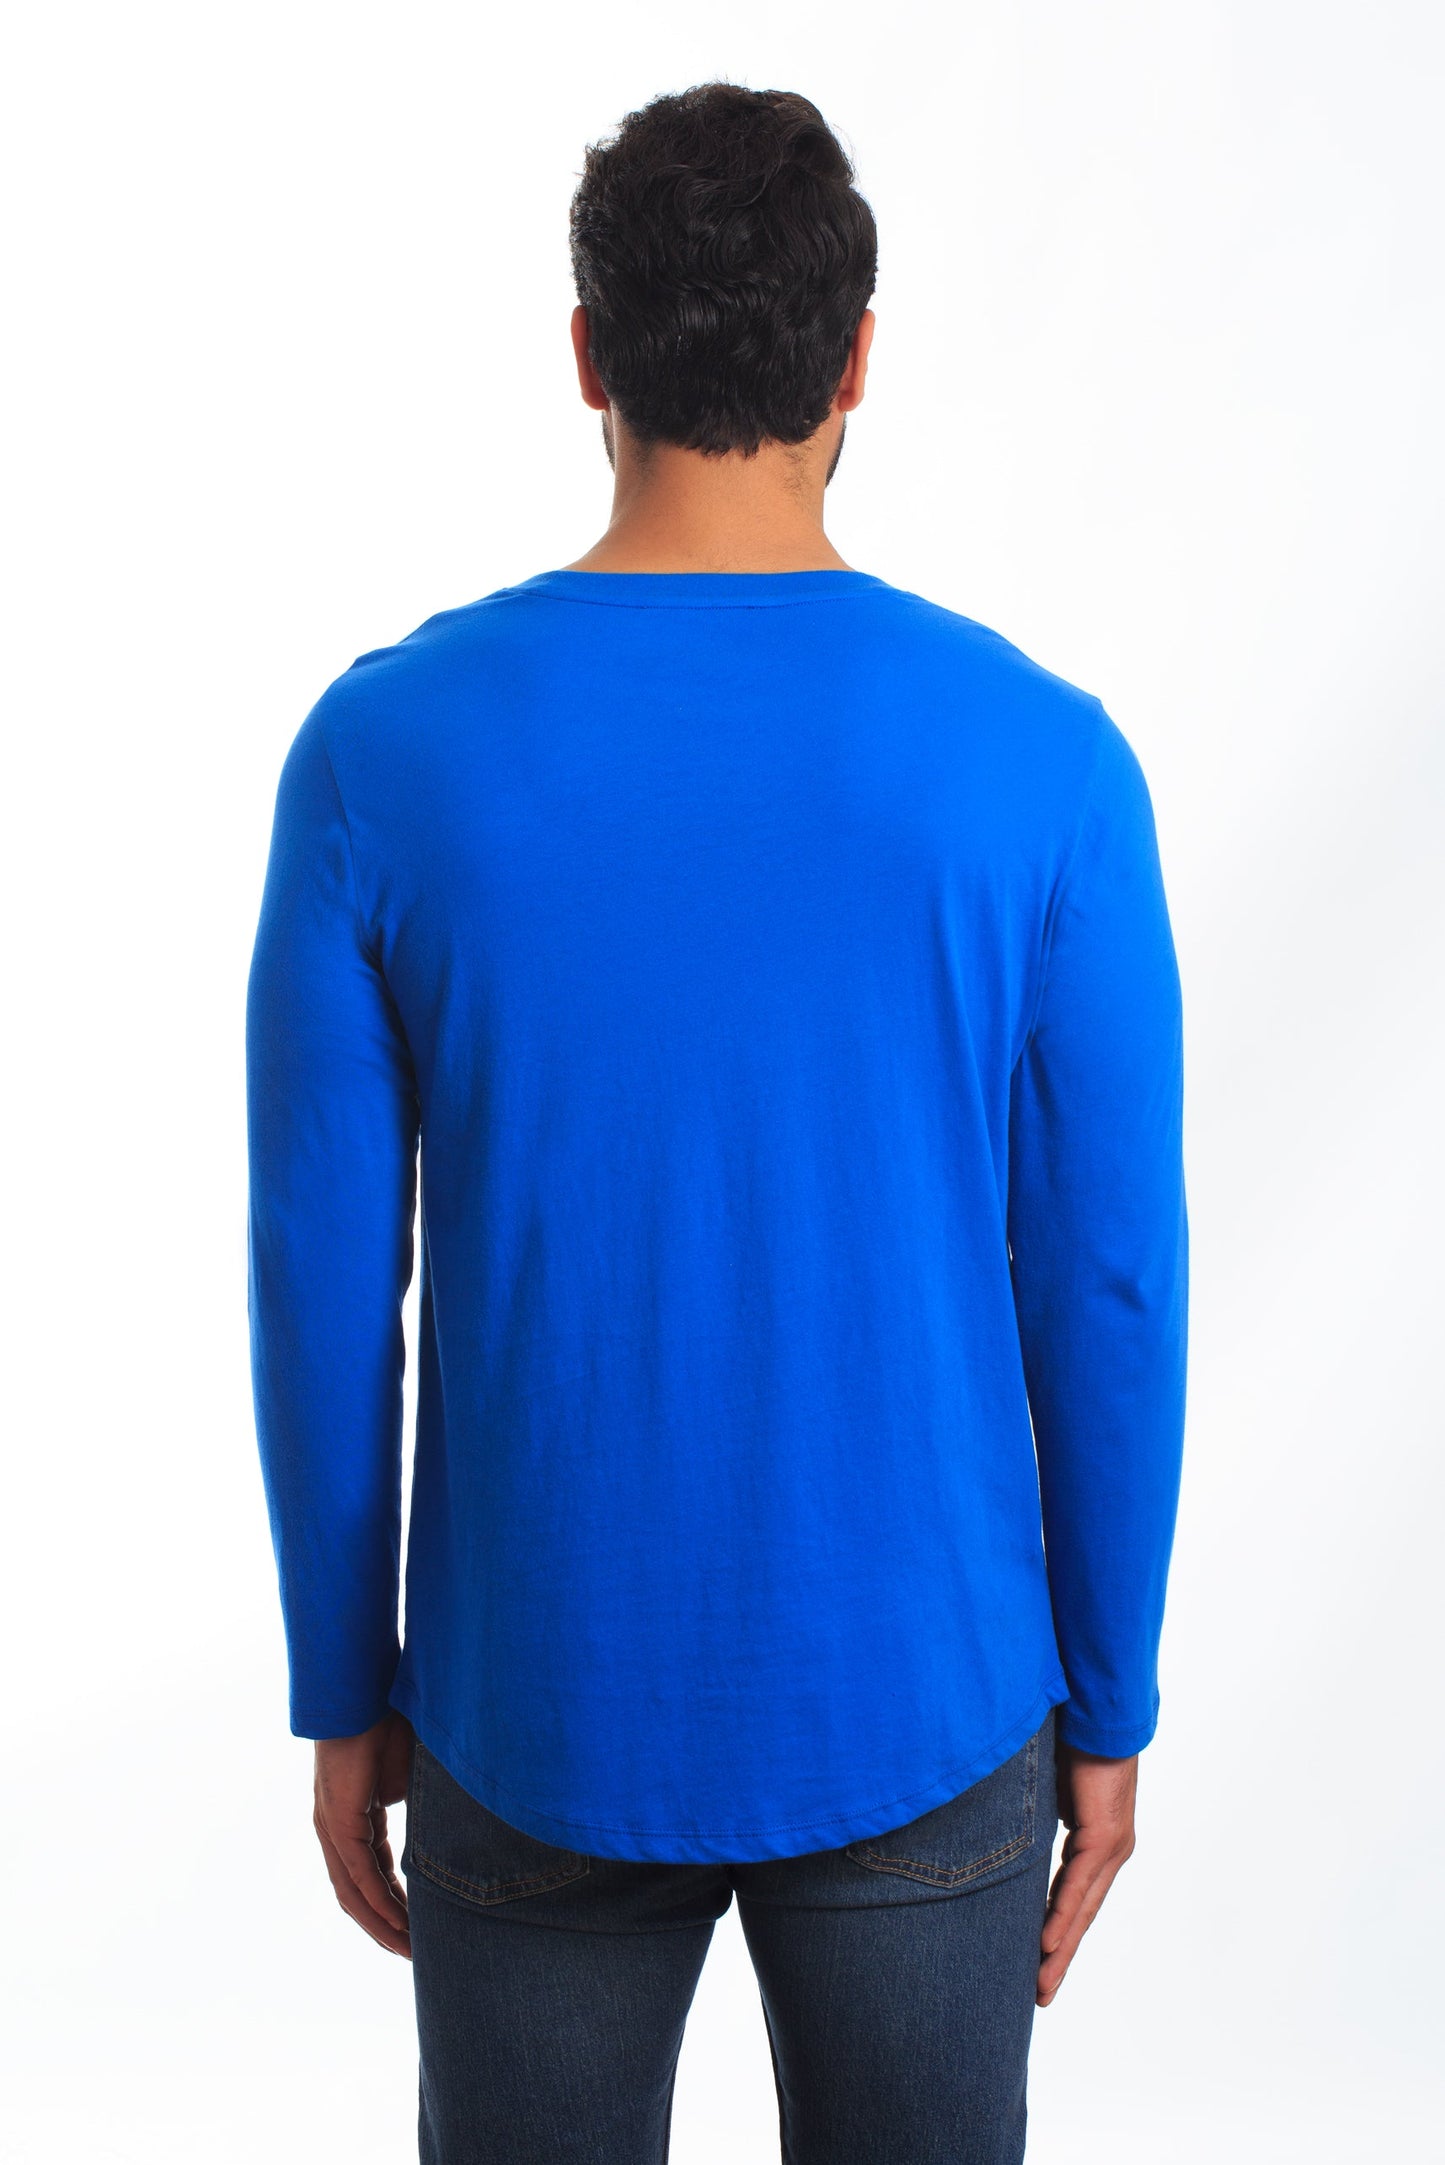 Blue Long Sleeve T-Shirt TEL-113 Back